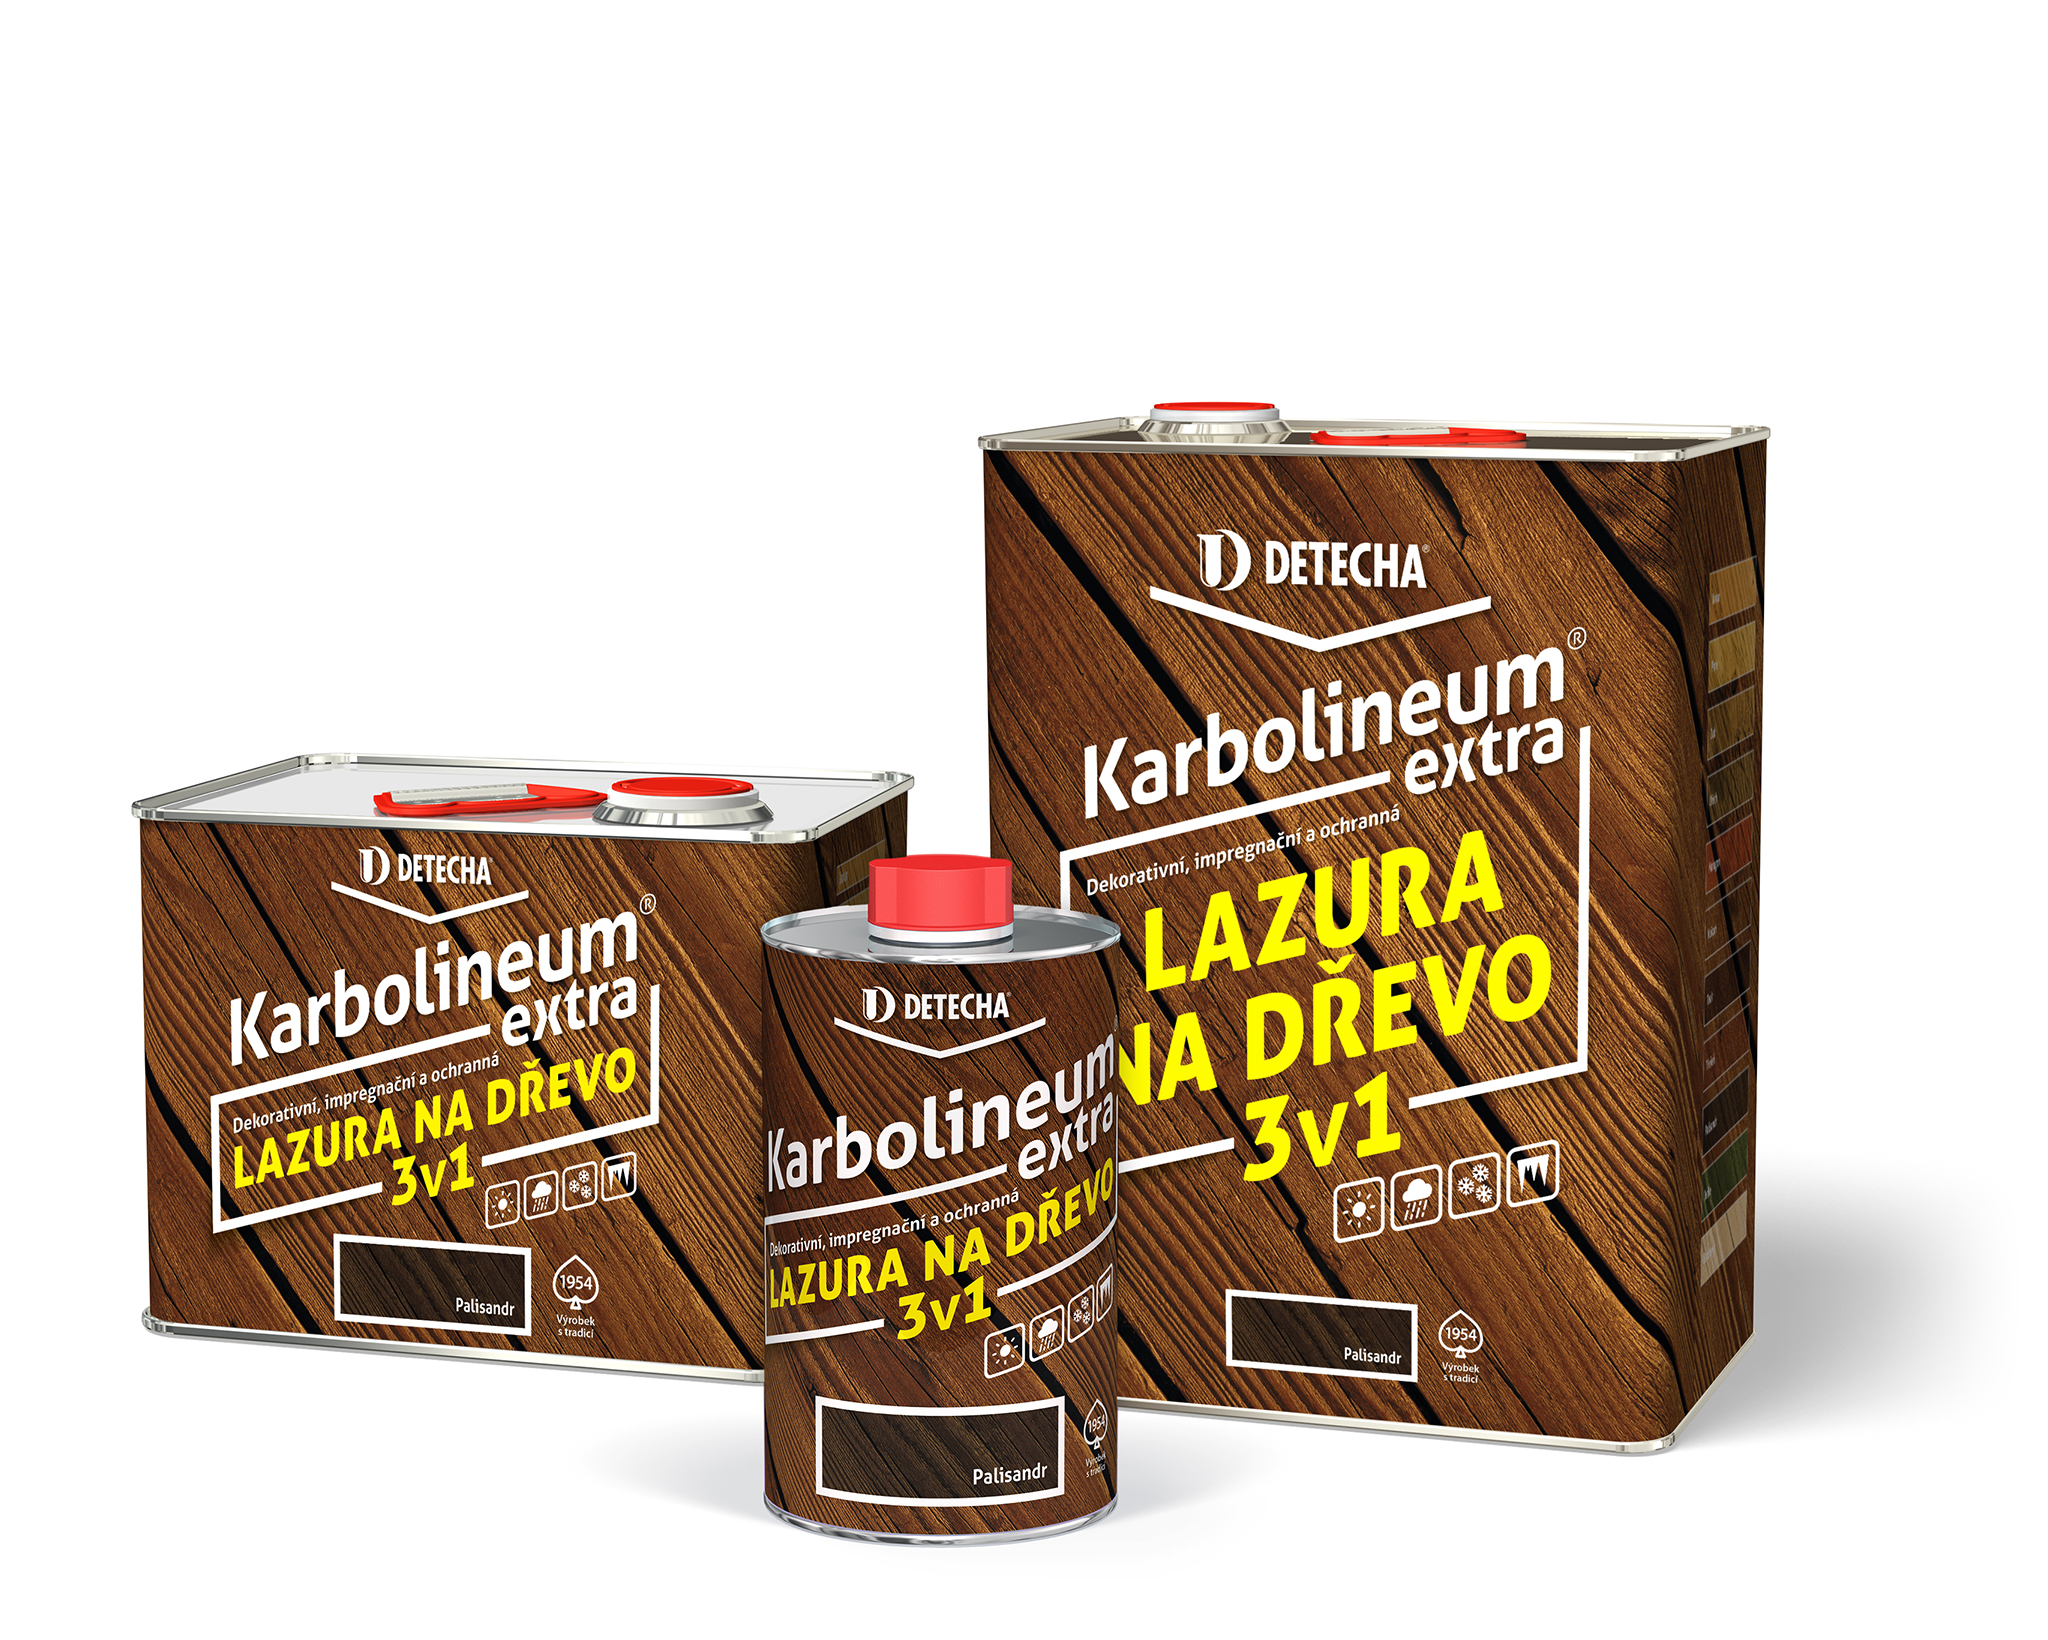 Detecha Karbolineum extra lazura na dřevo 3v1 0,7kg